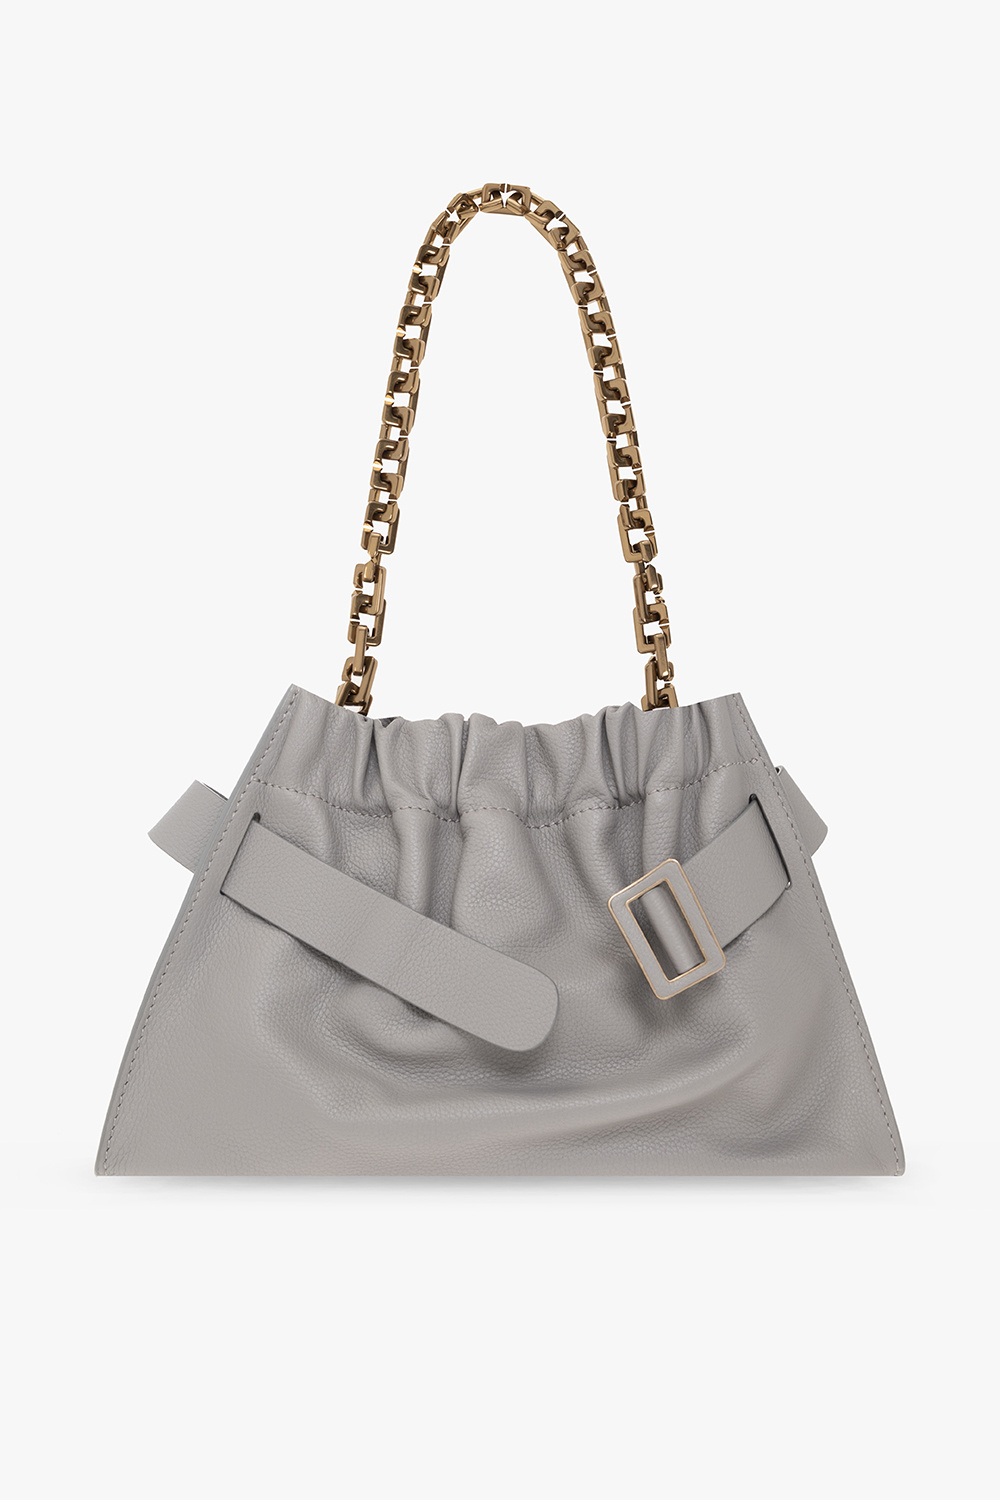 Chain Strap Bag, Buy Sensational Women's Handbags Online